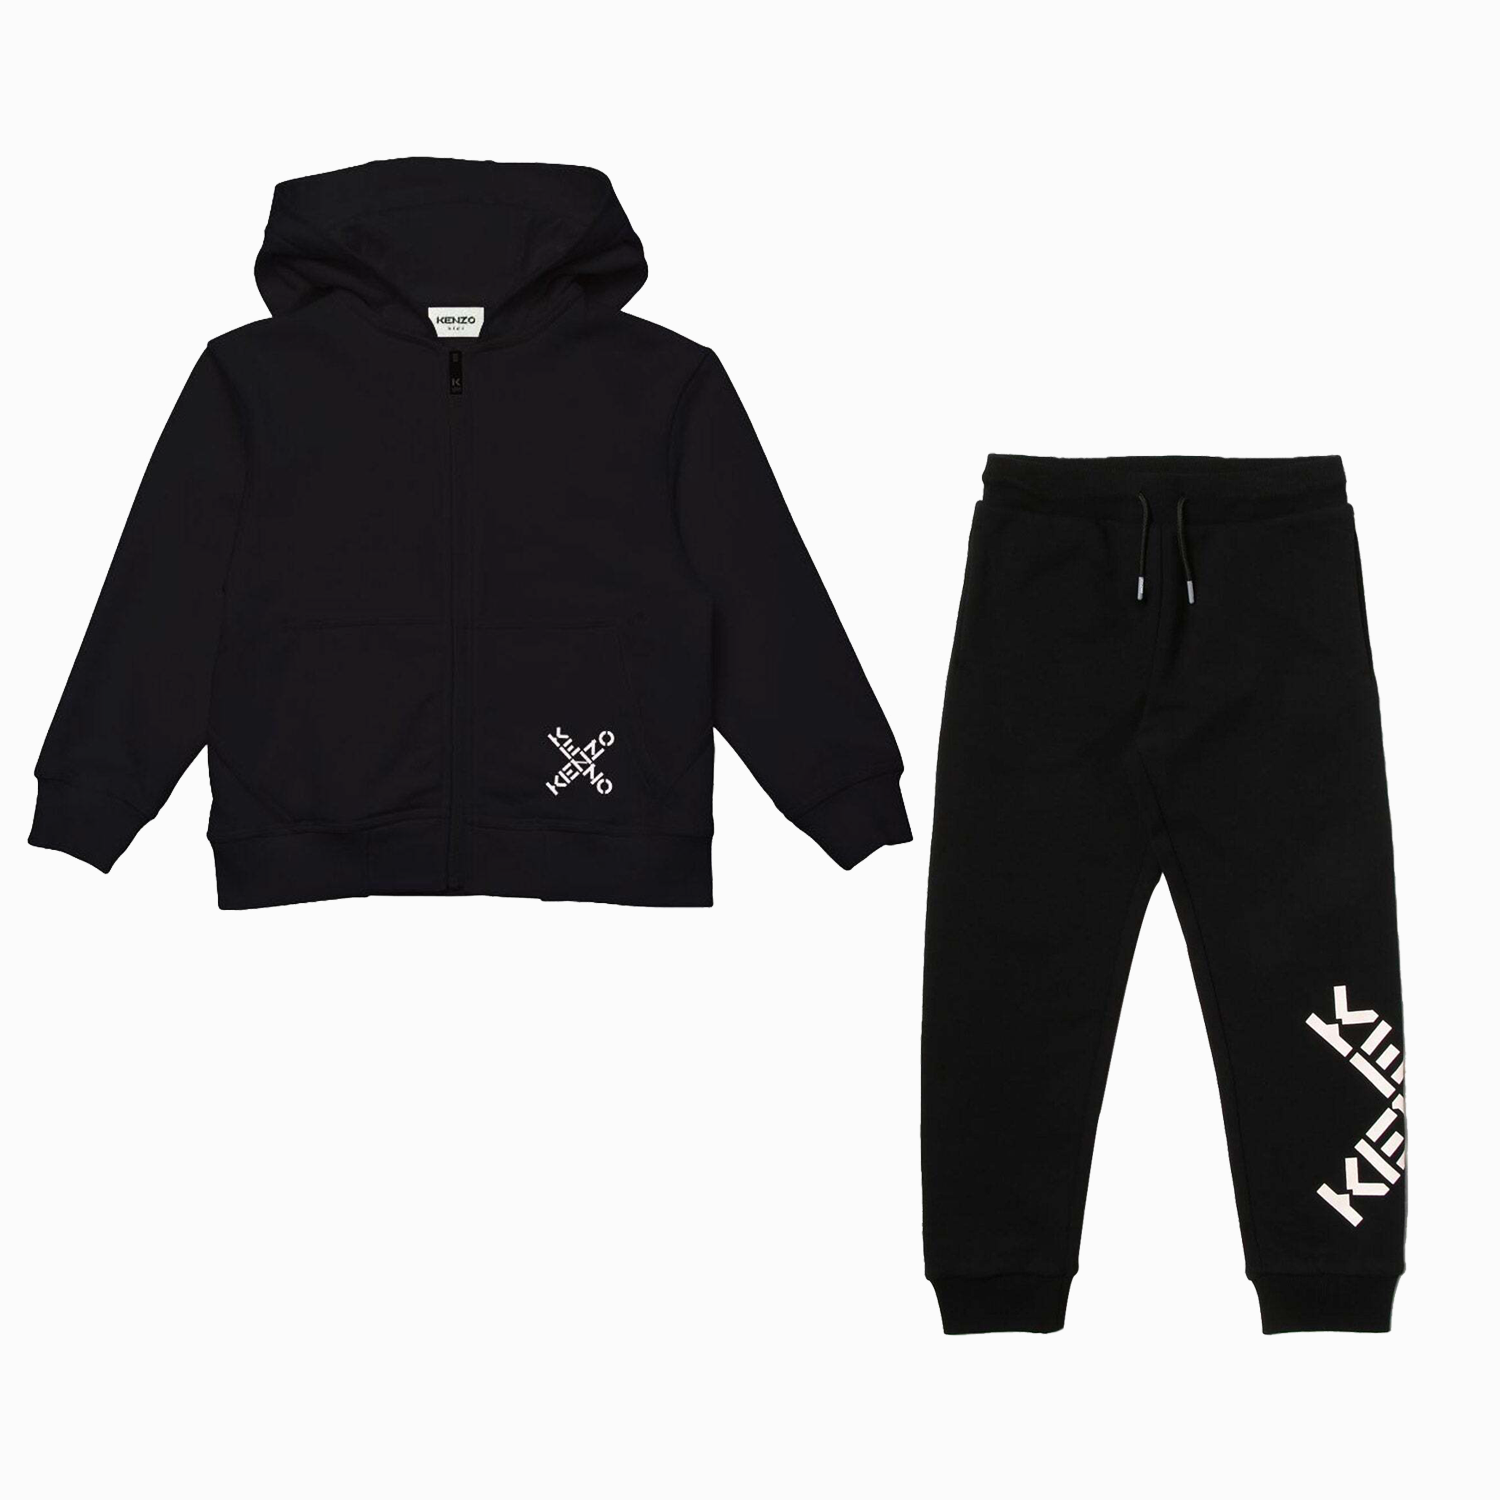 Kenzo Kid's Logo Cardigan Outfit - Color: Big Kid's Dark Grey, Small Kid's Dark Grey - Kids Premium Clothing -